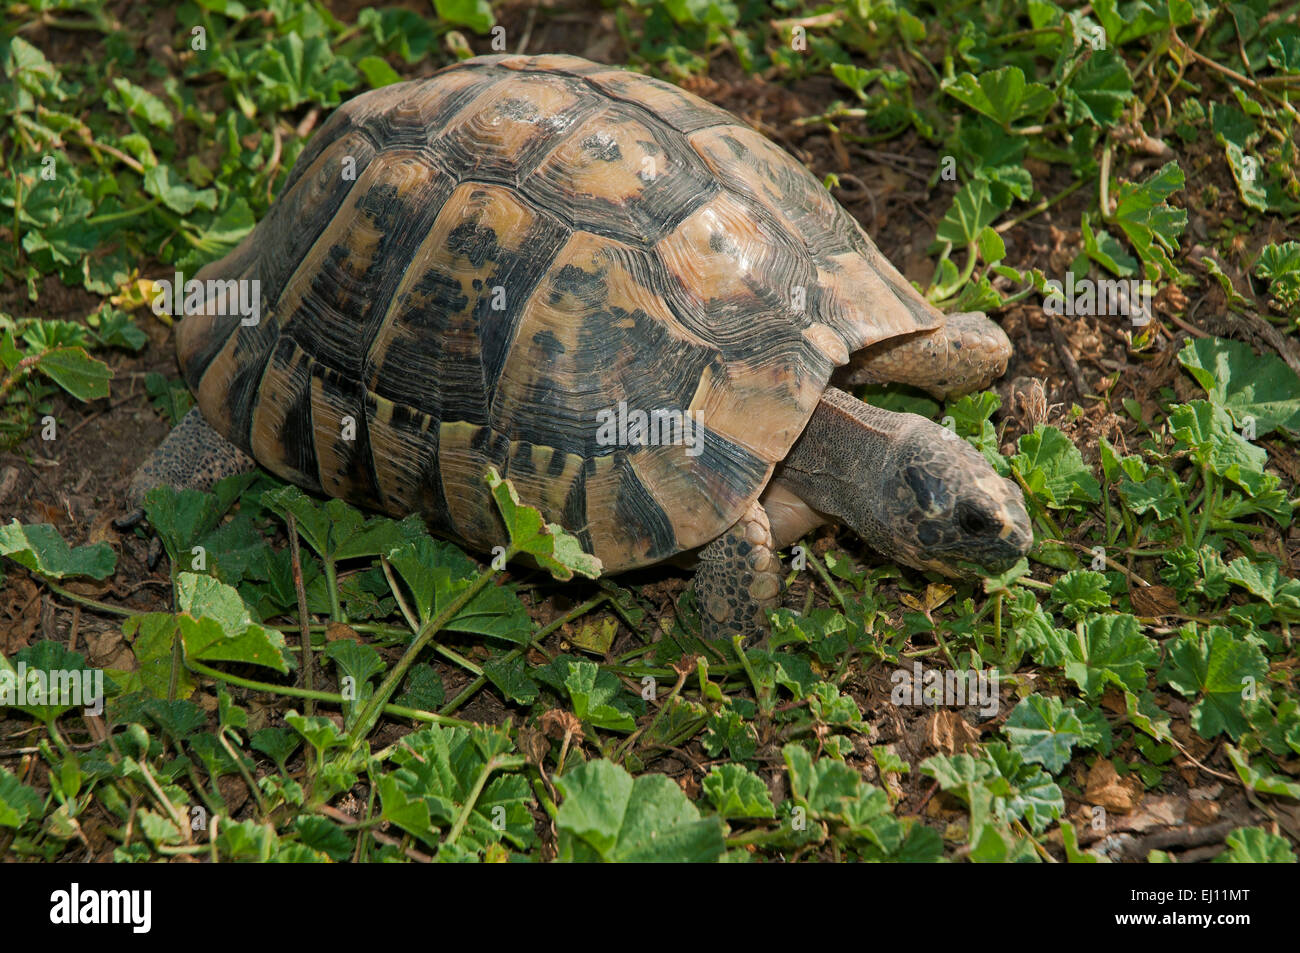 Spur-thighed tortoise or Greek tortoise (Testudo graeca), Region of Andalusia, Spain, Europe Stock Photo